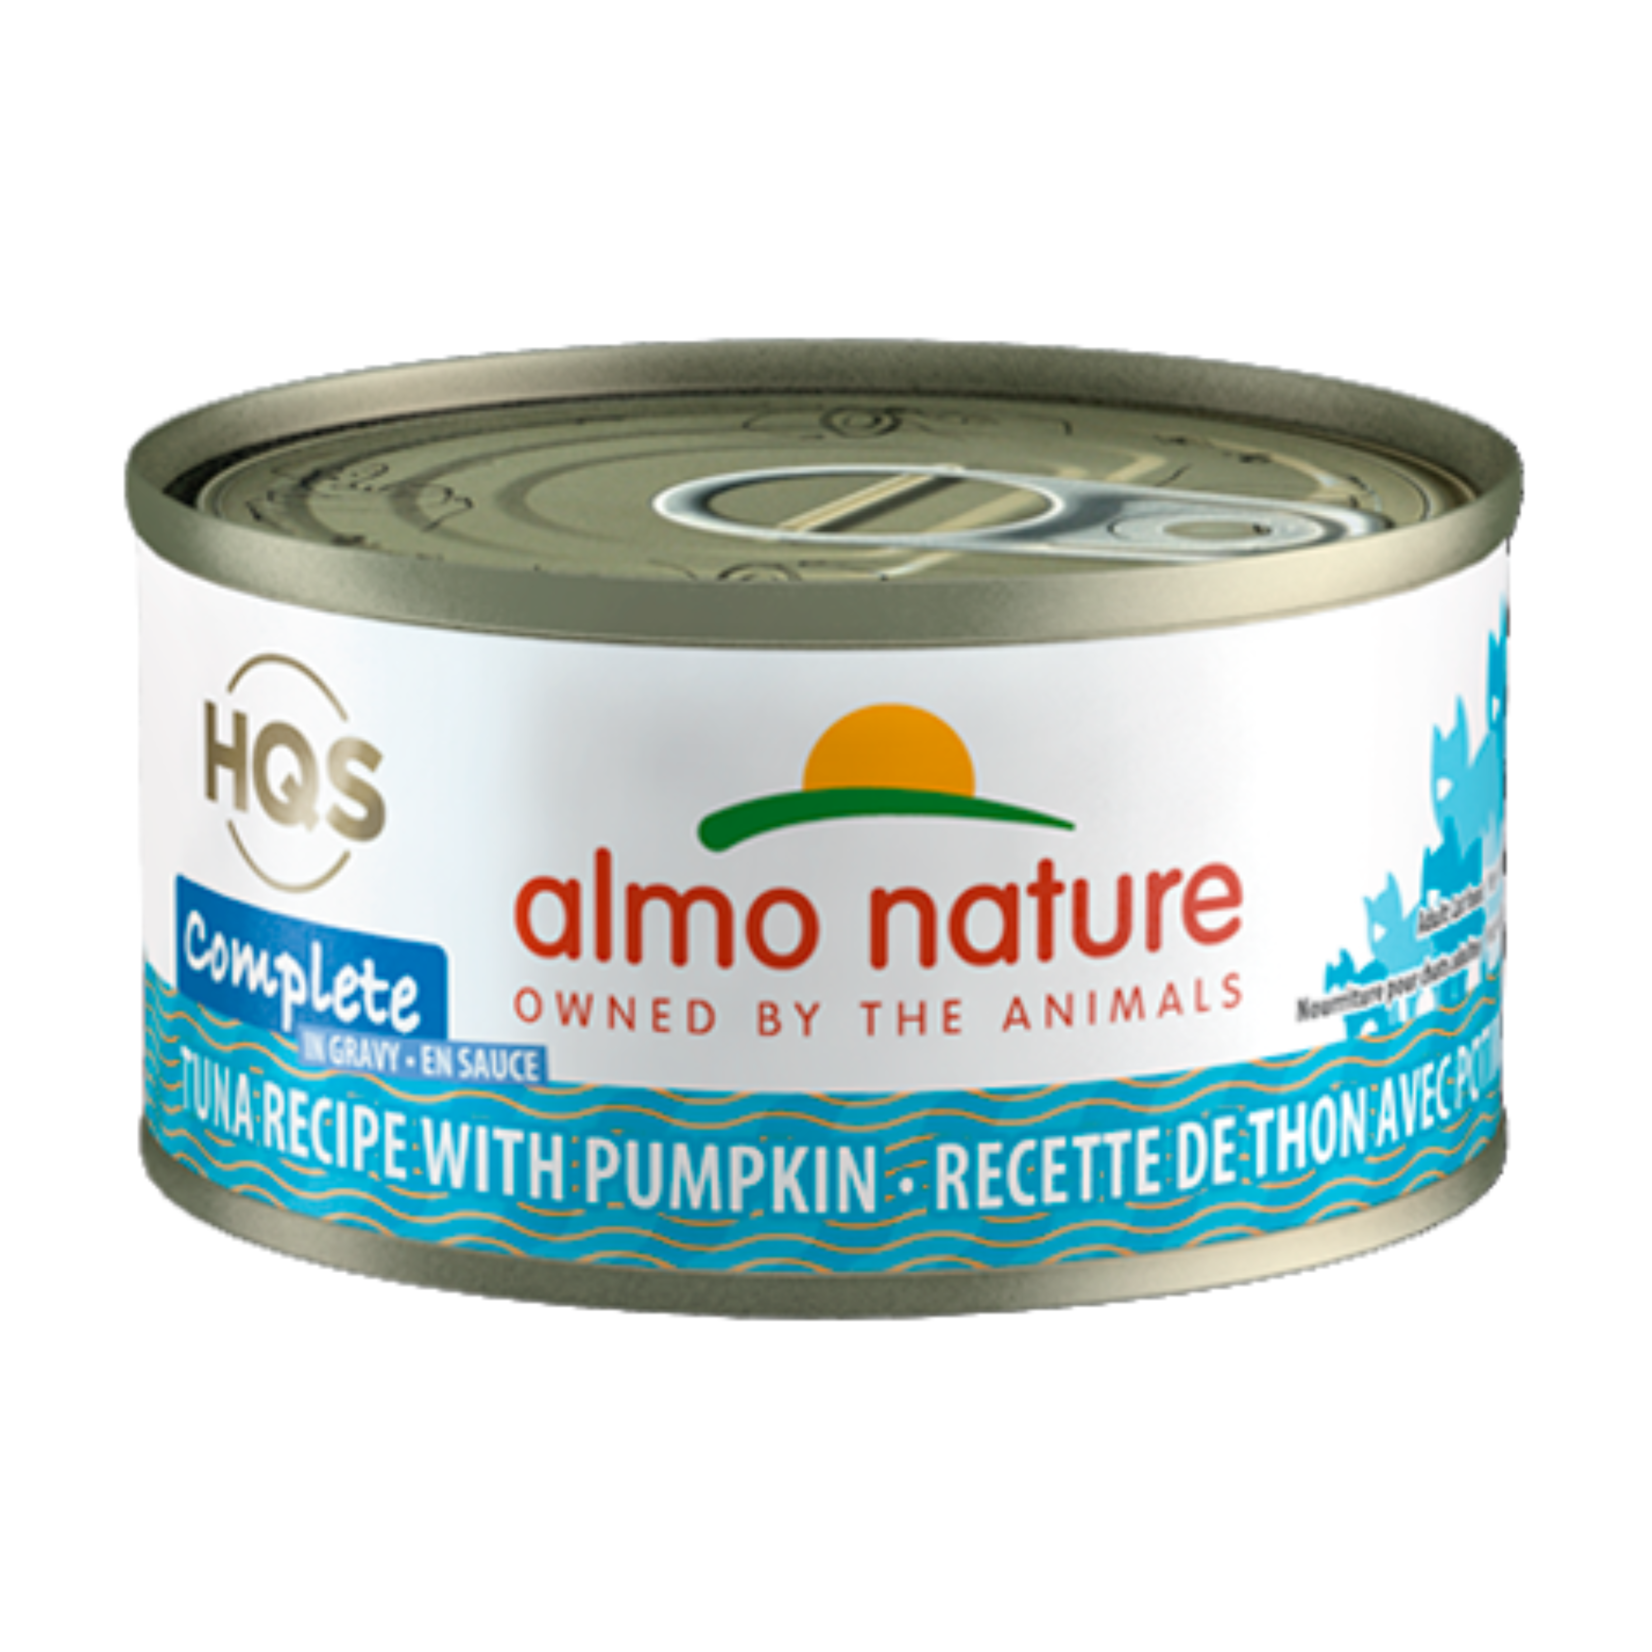 Almo Nature Almo Nature: HQS Complete: Tuna with Pumpkin in Gravy 70g